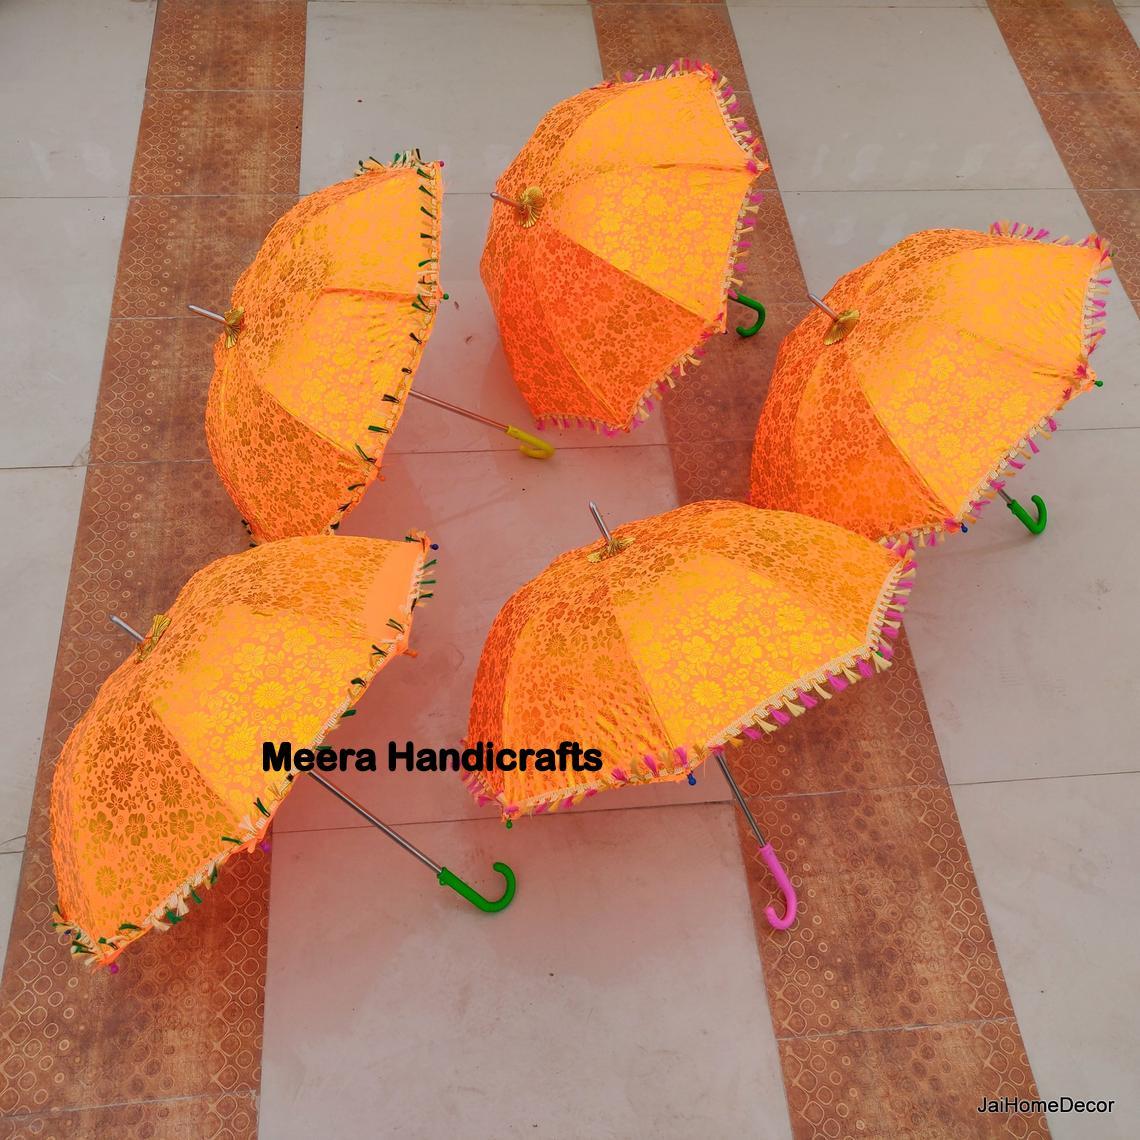 Multicolor Deininger Decorative  Umbrella